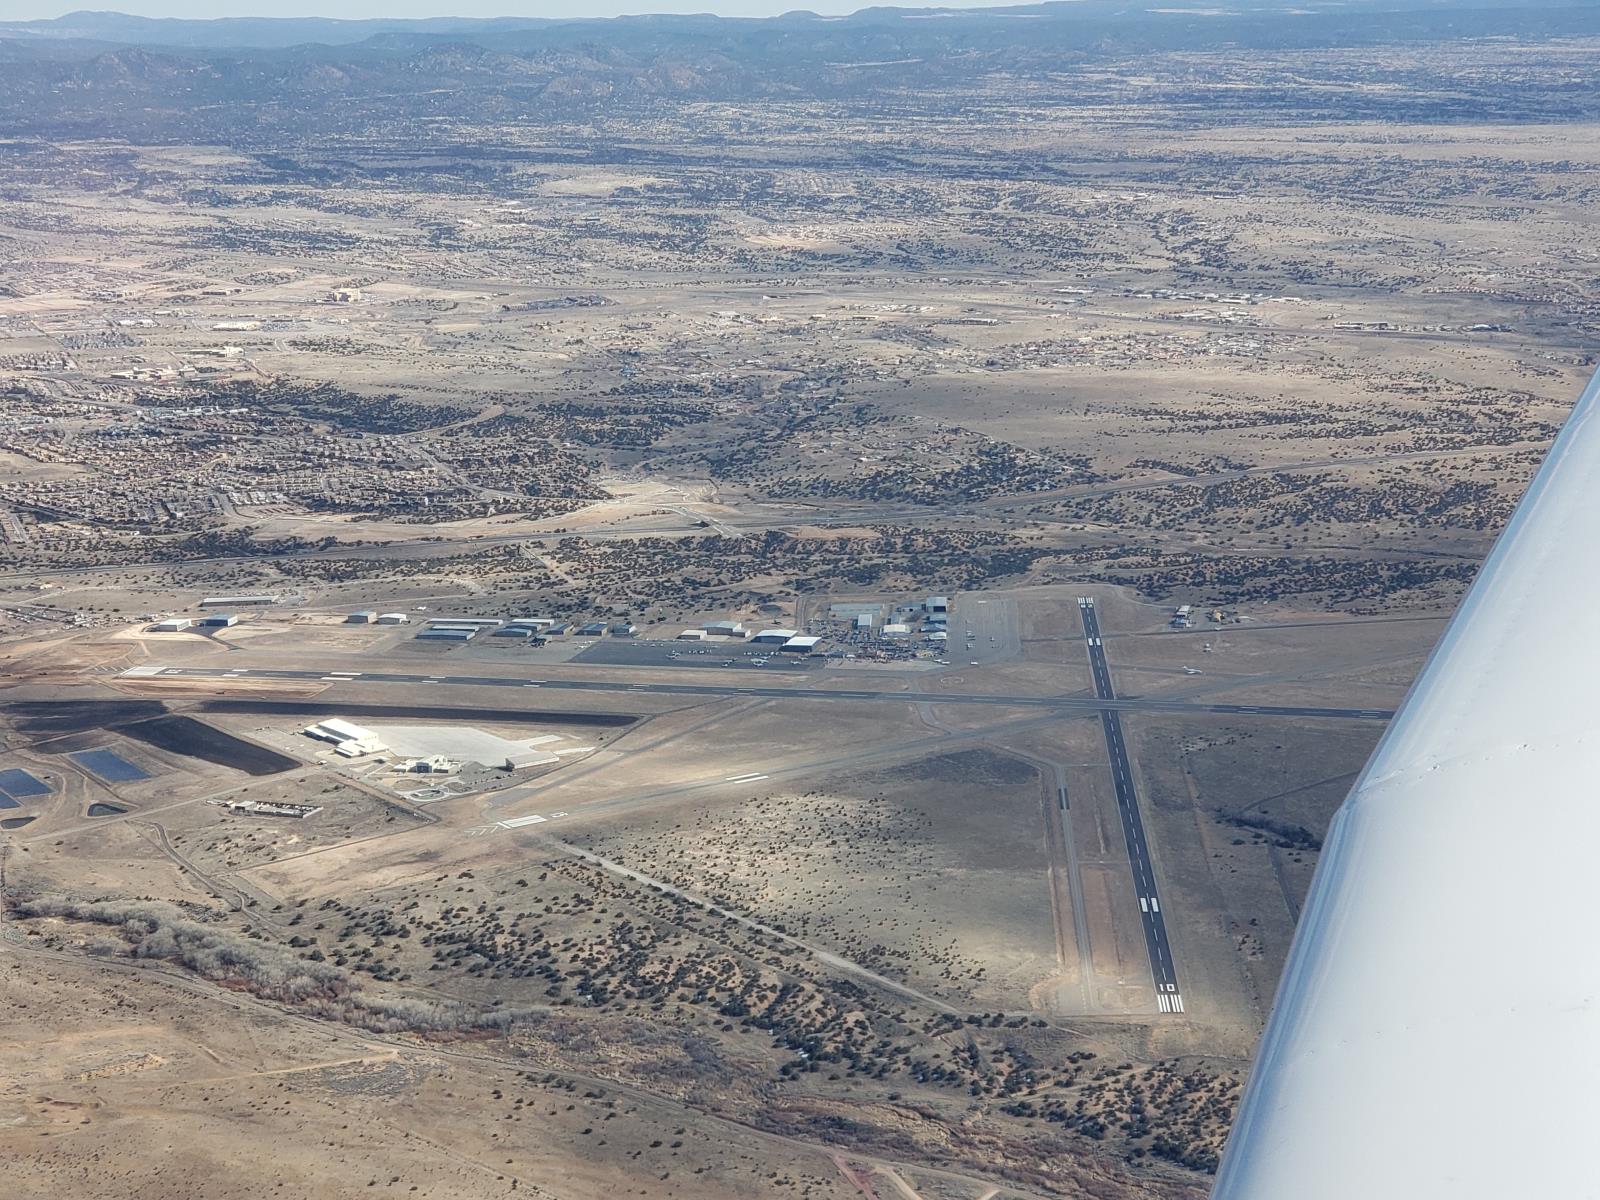 Overflying Santa Fe (KSAF) on way home to Angel Fire (KAXX)